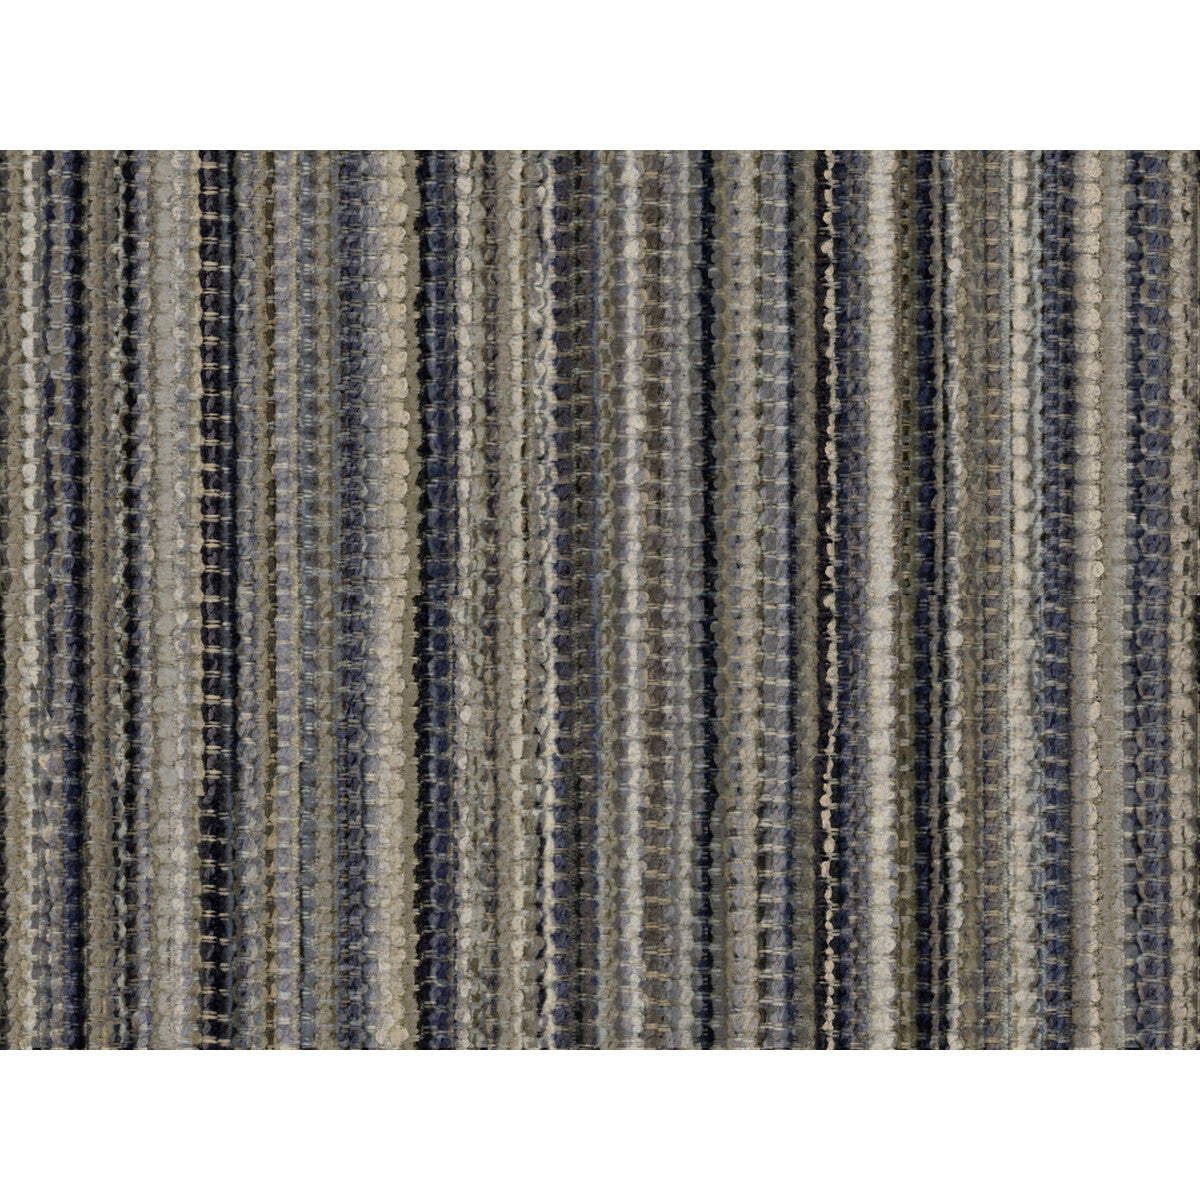 Kravet Smart fabric in 34357-516 color - pattern 34357.516.0 - by Kravet Smart